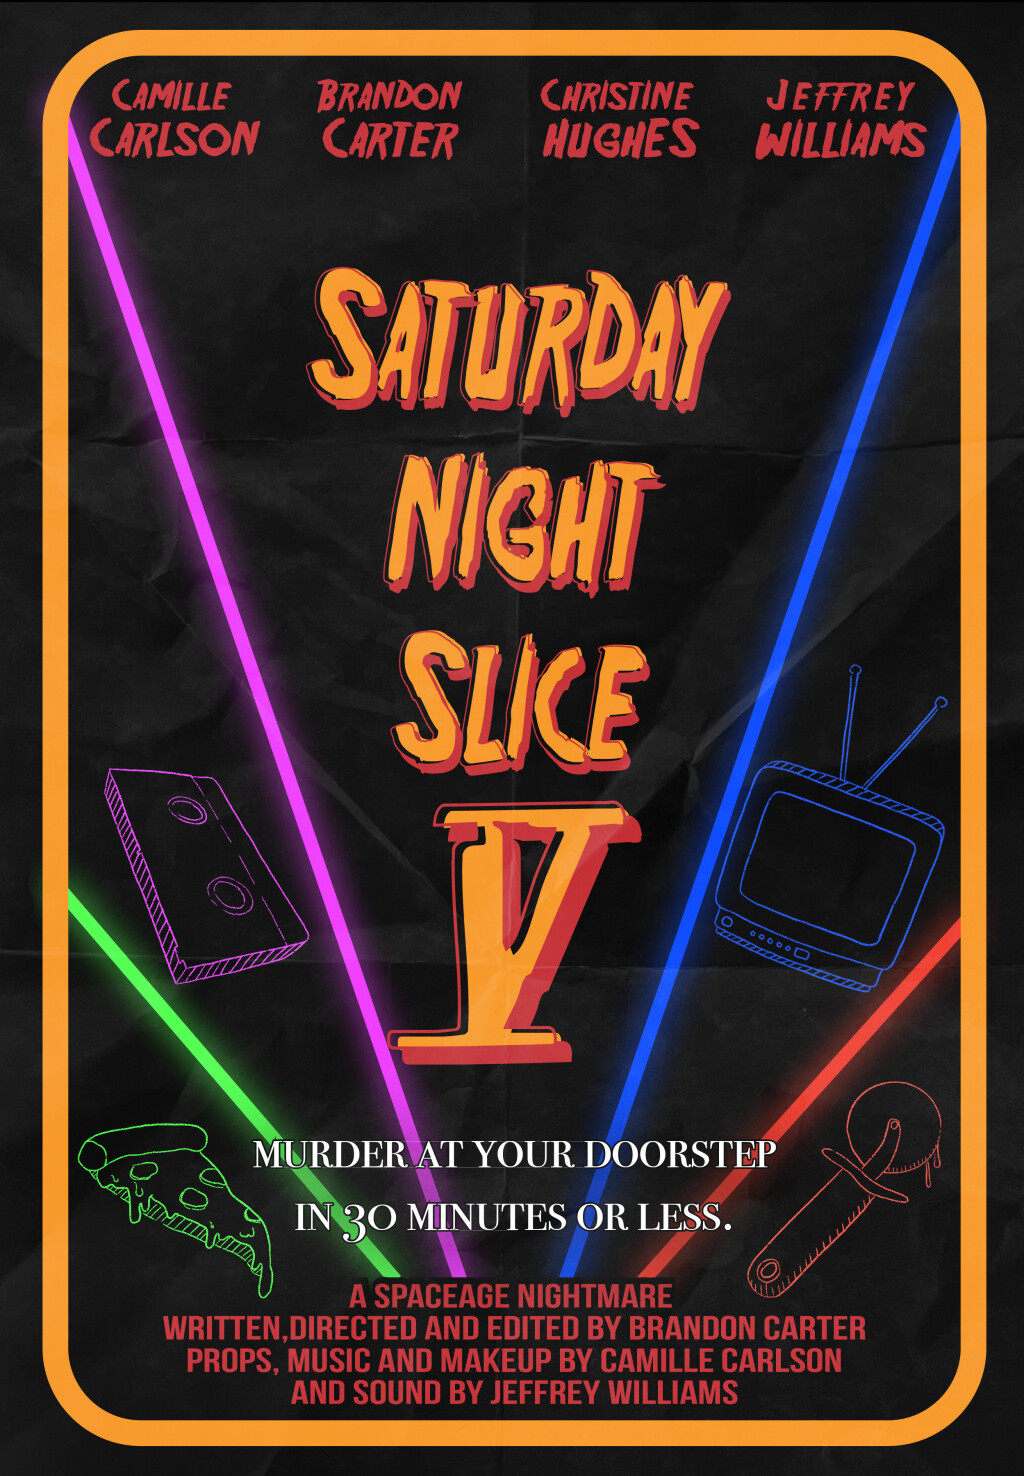 Filmposter for Saturday Night Slice V